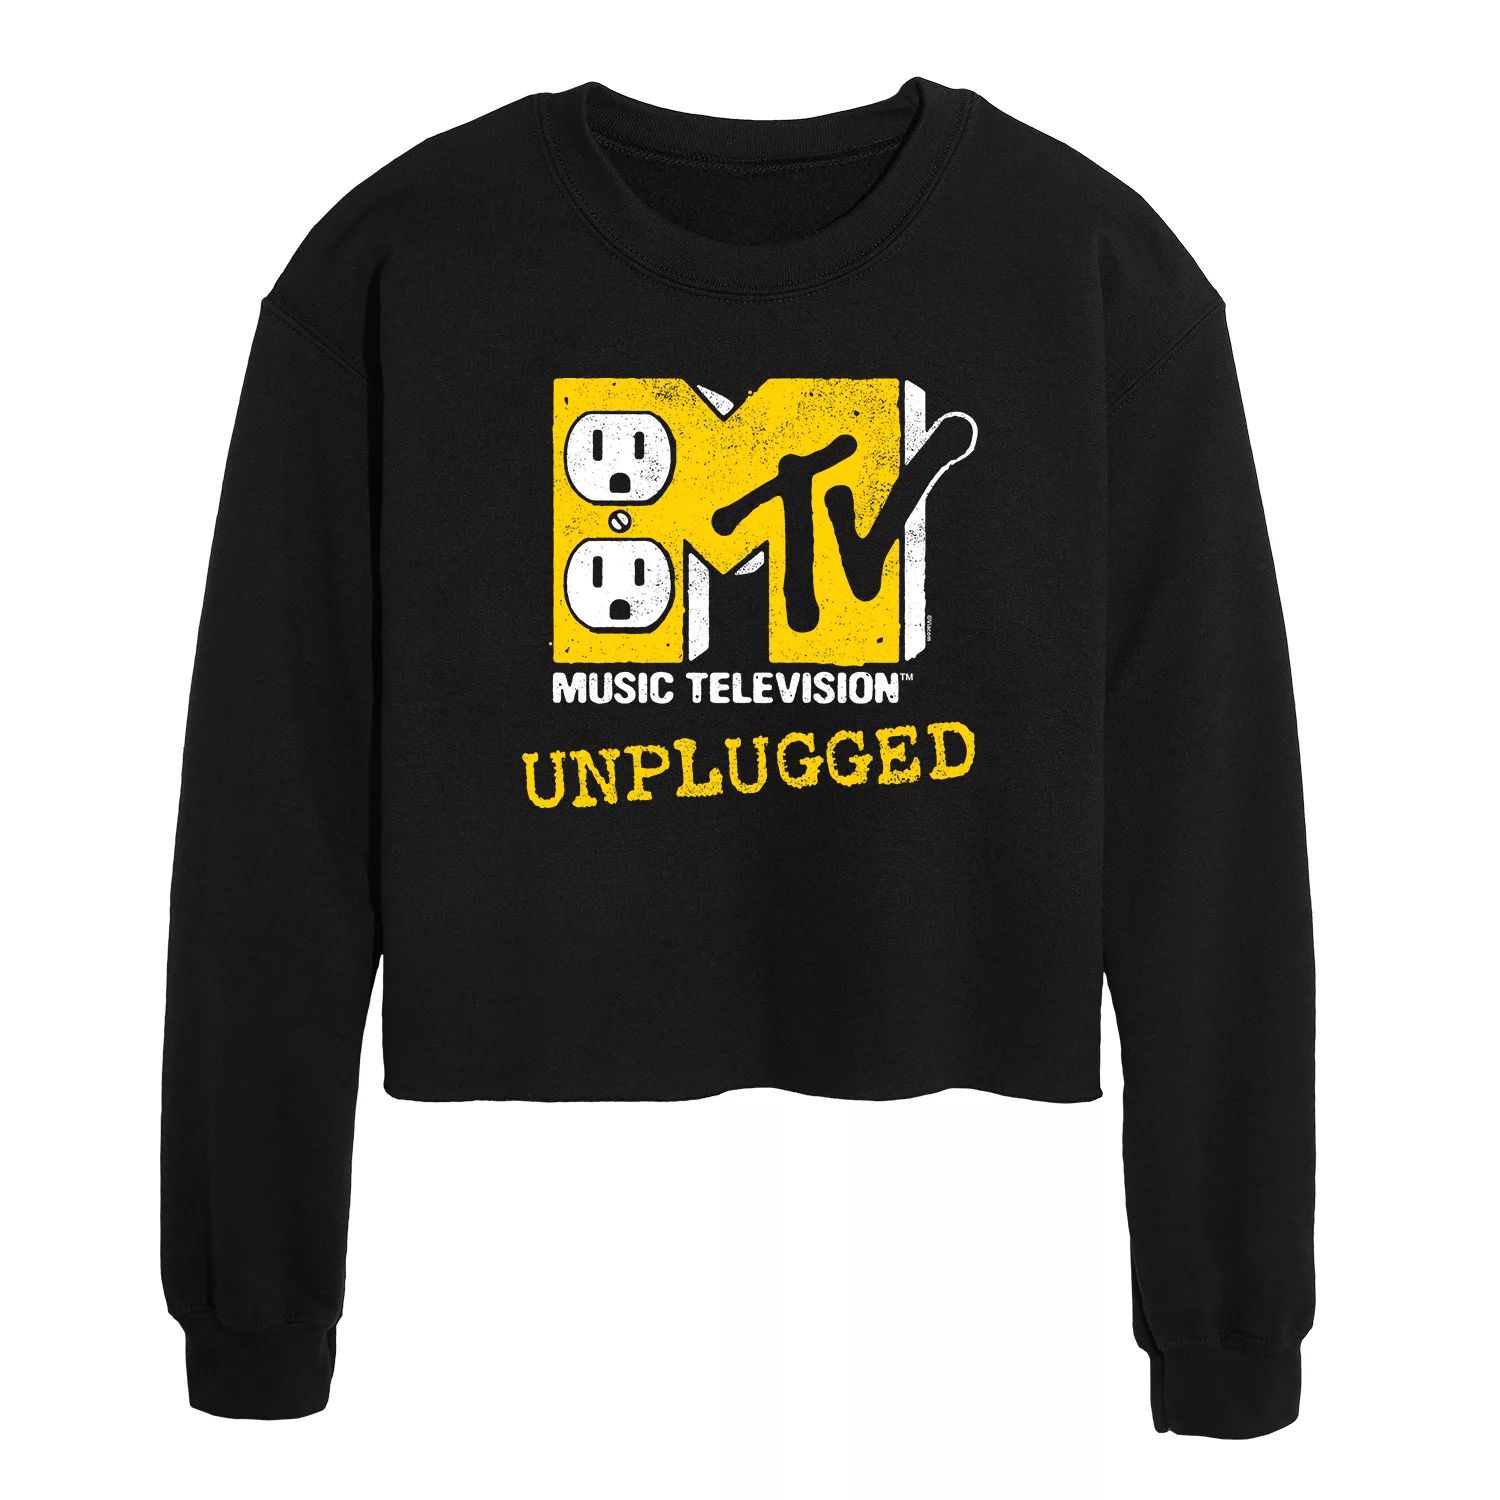 Укороченный свитшот с логотипом MTV Unplugged для юниоров Licensed Character raabe max mtv unplugged